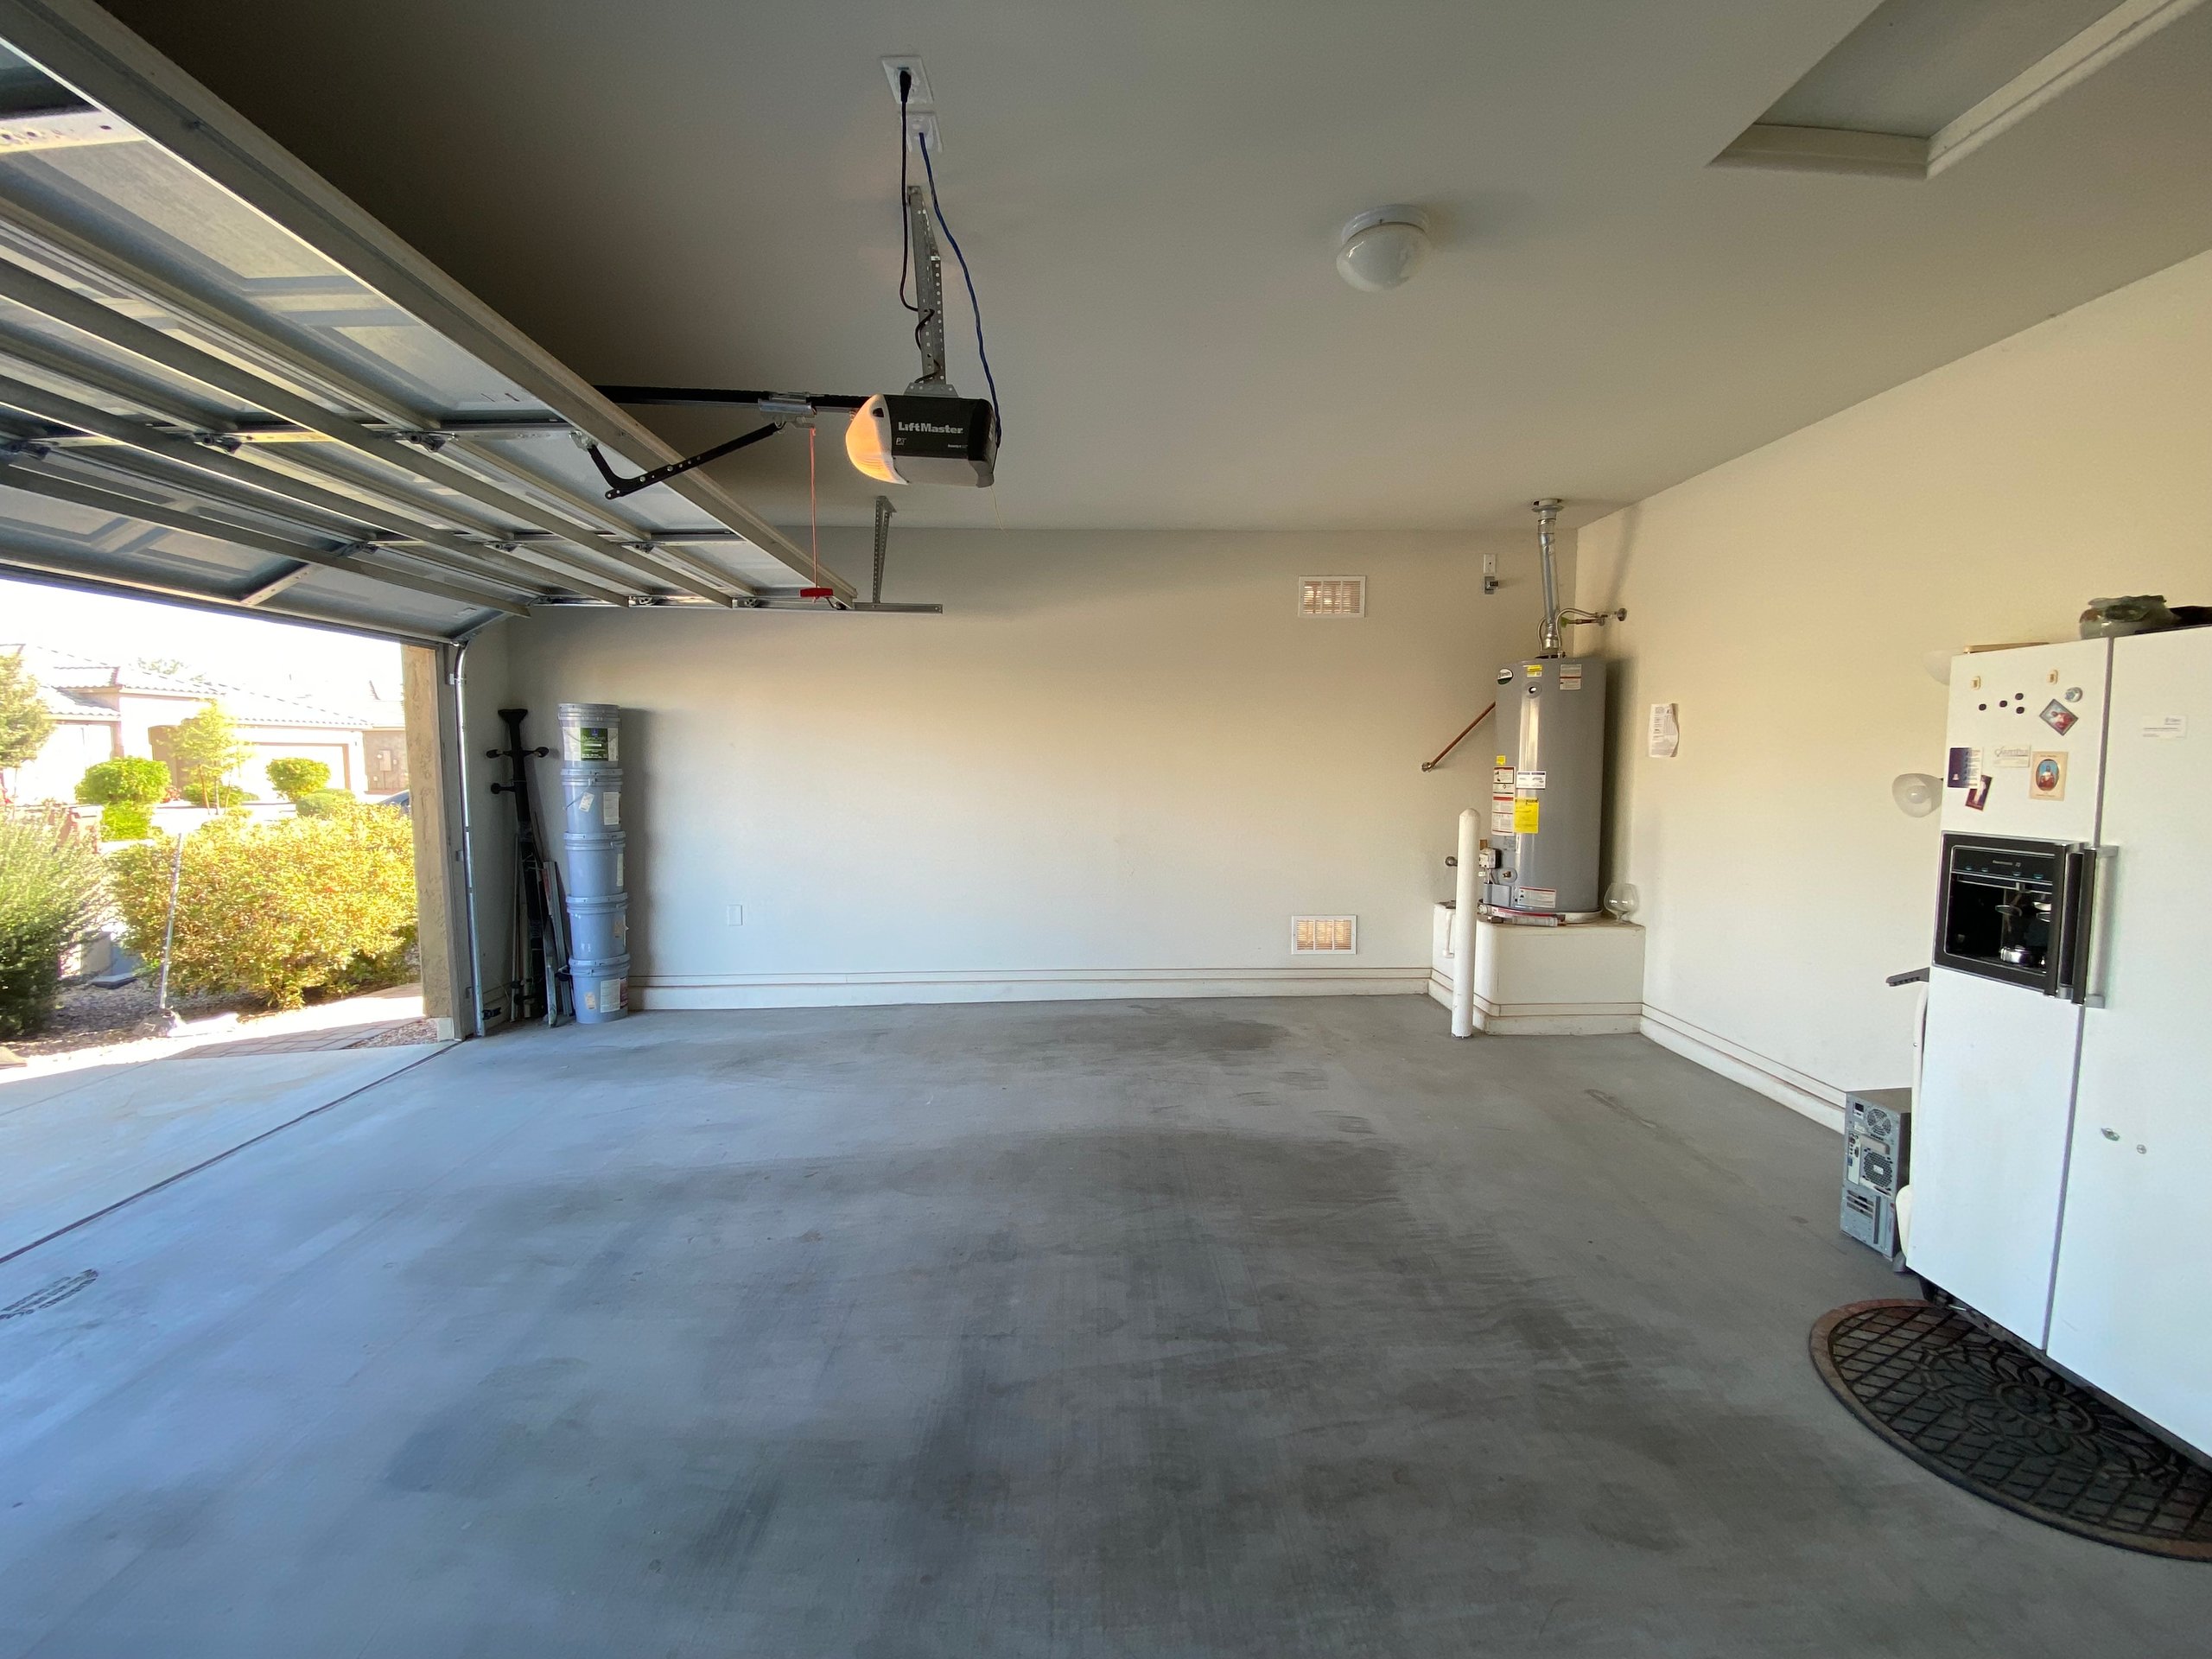 20x10 Garage self storage unit in San Tan Valley, AZ